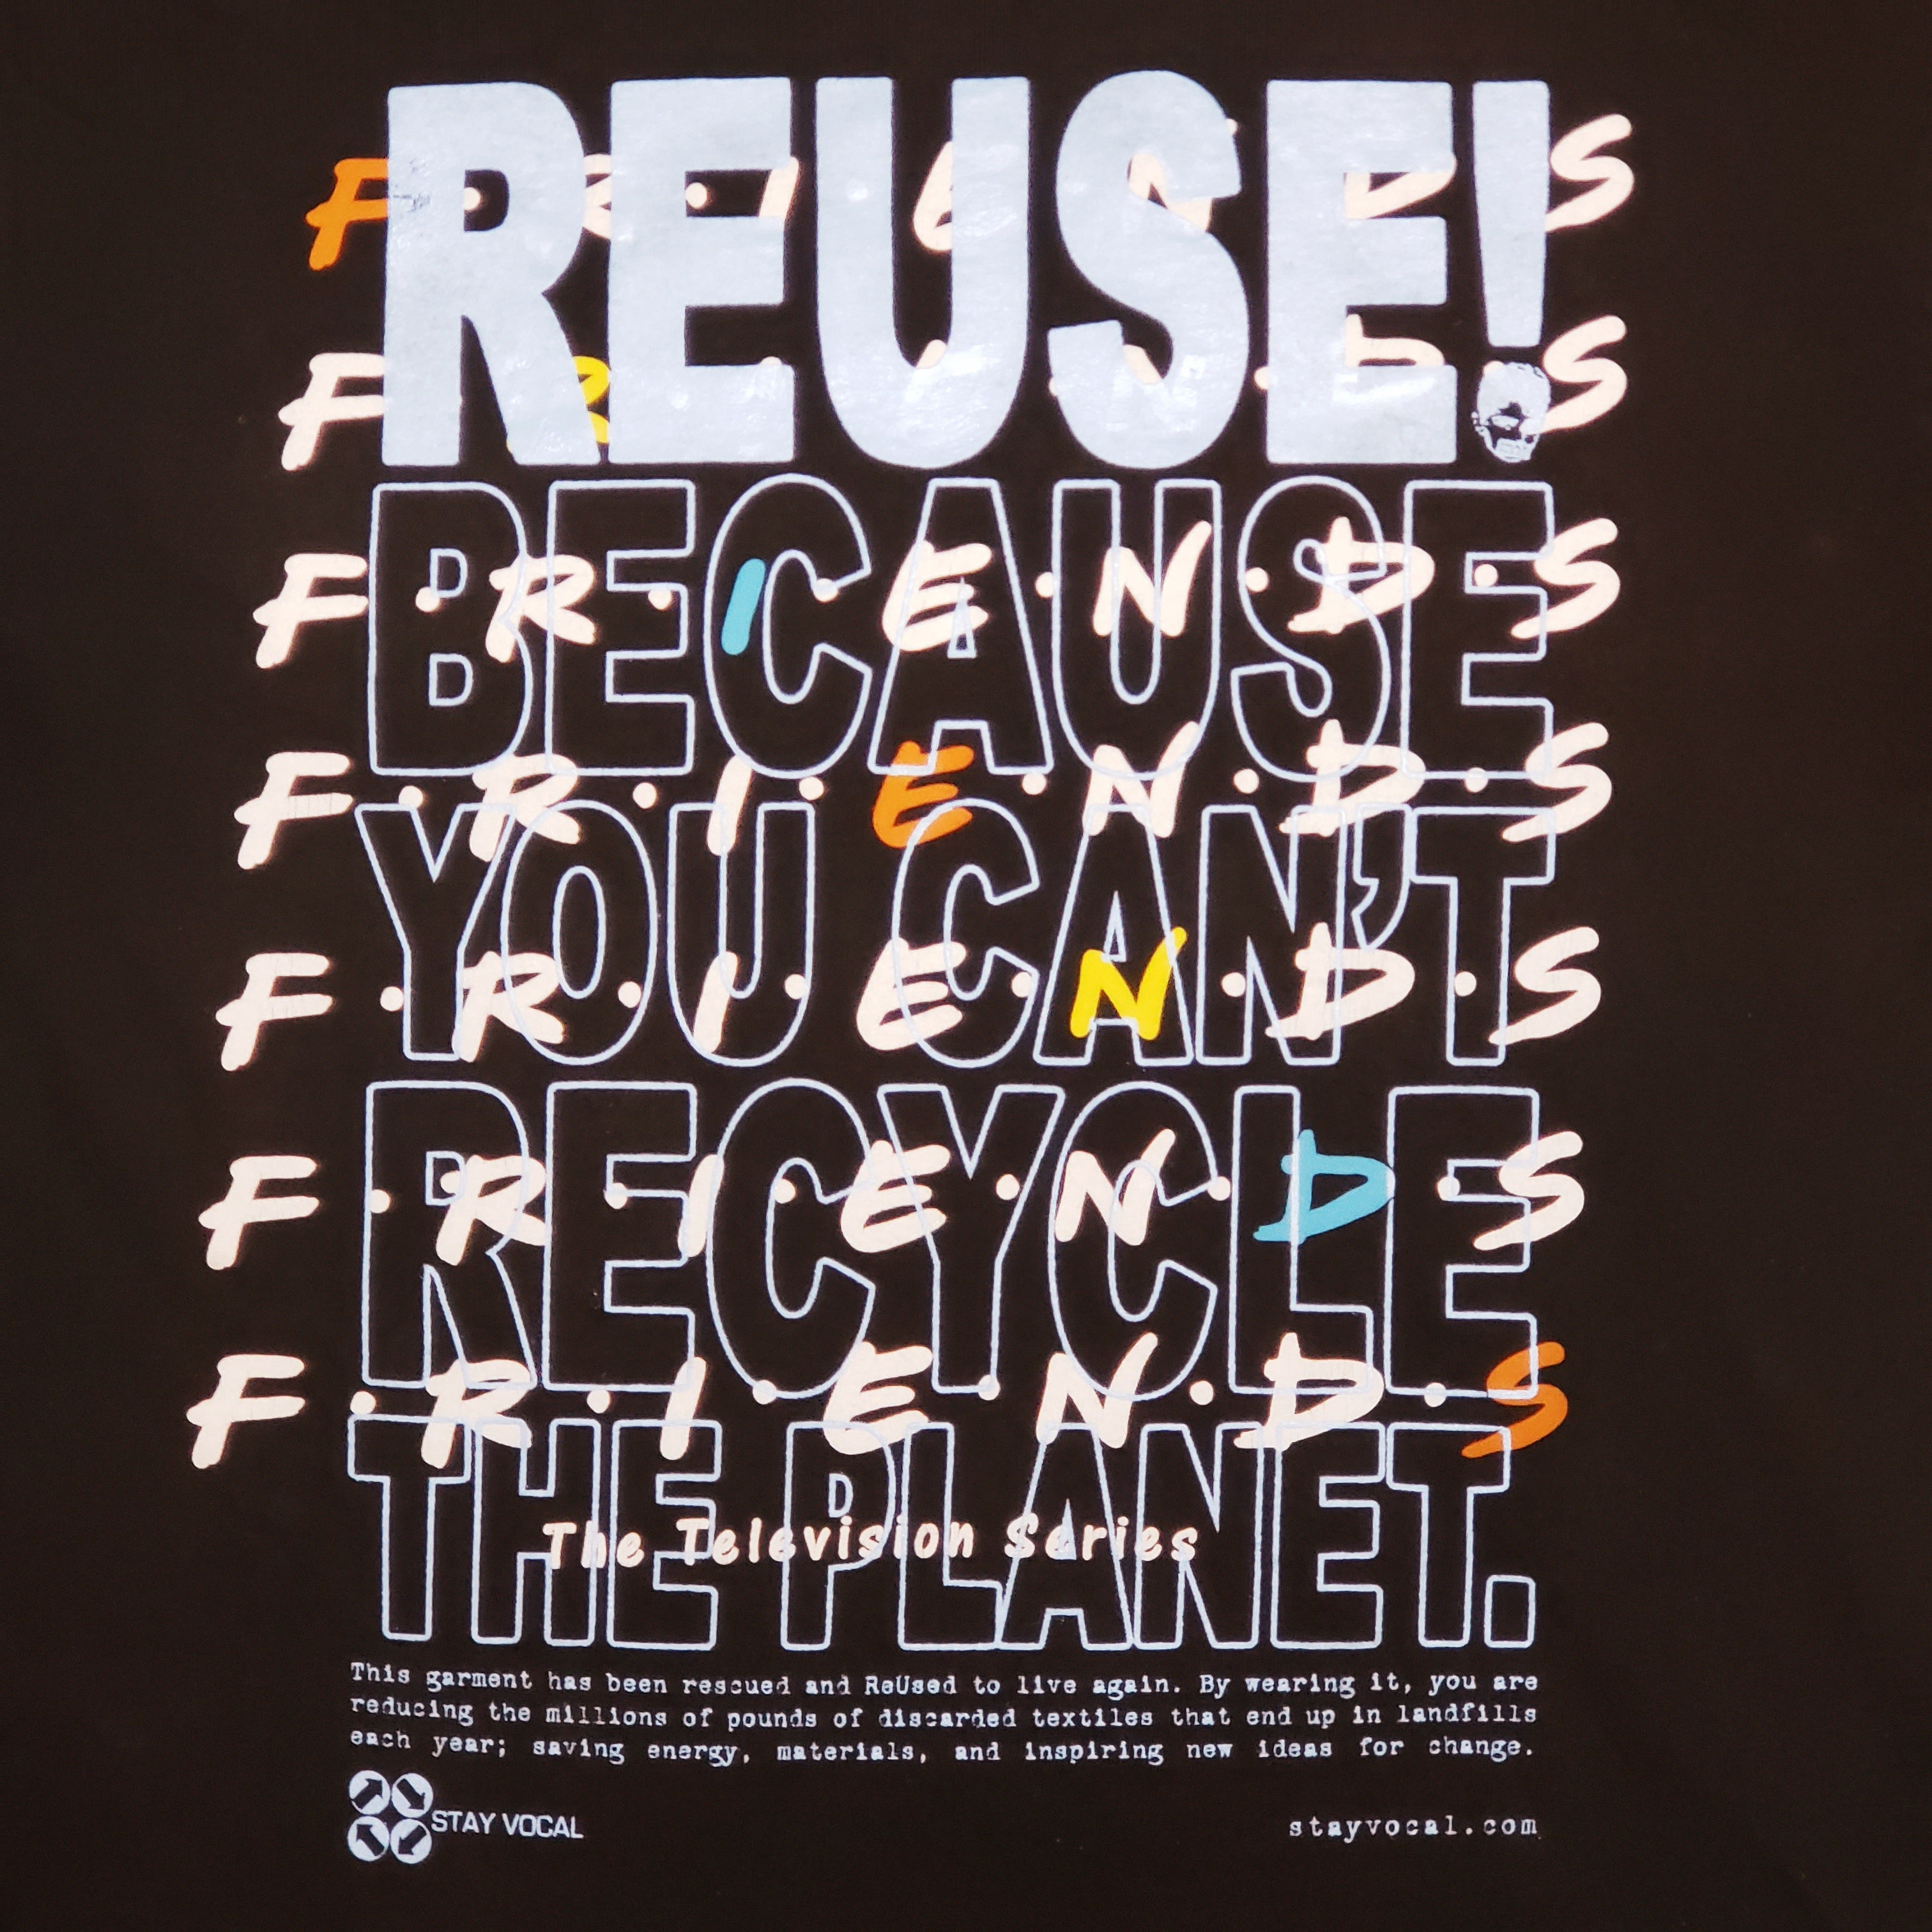 One of a Kind (Men's L) REUSE! Friends TV Show Logo T-Shirt